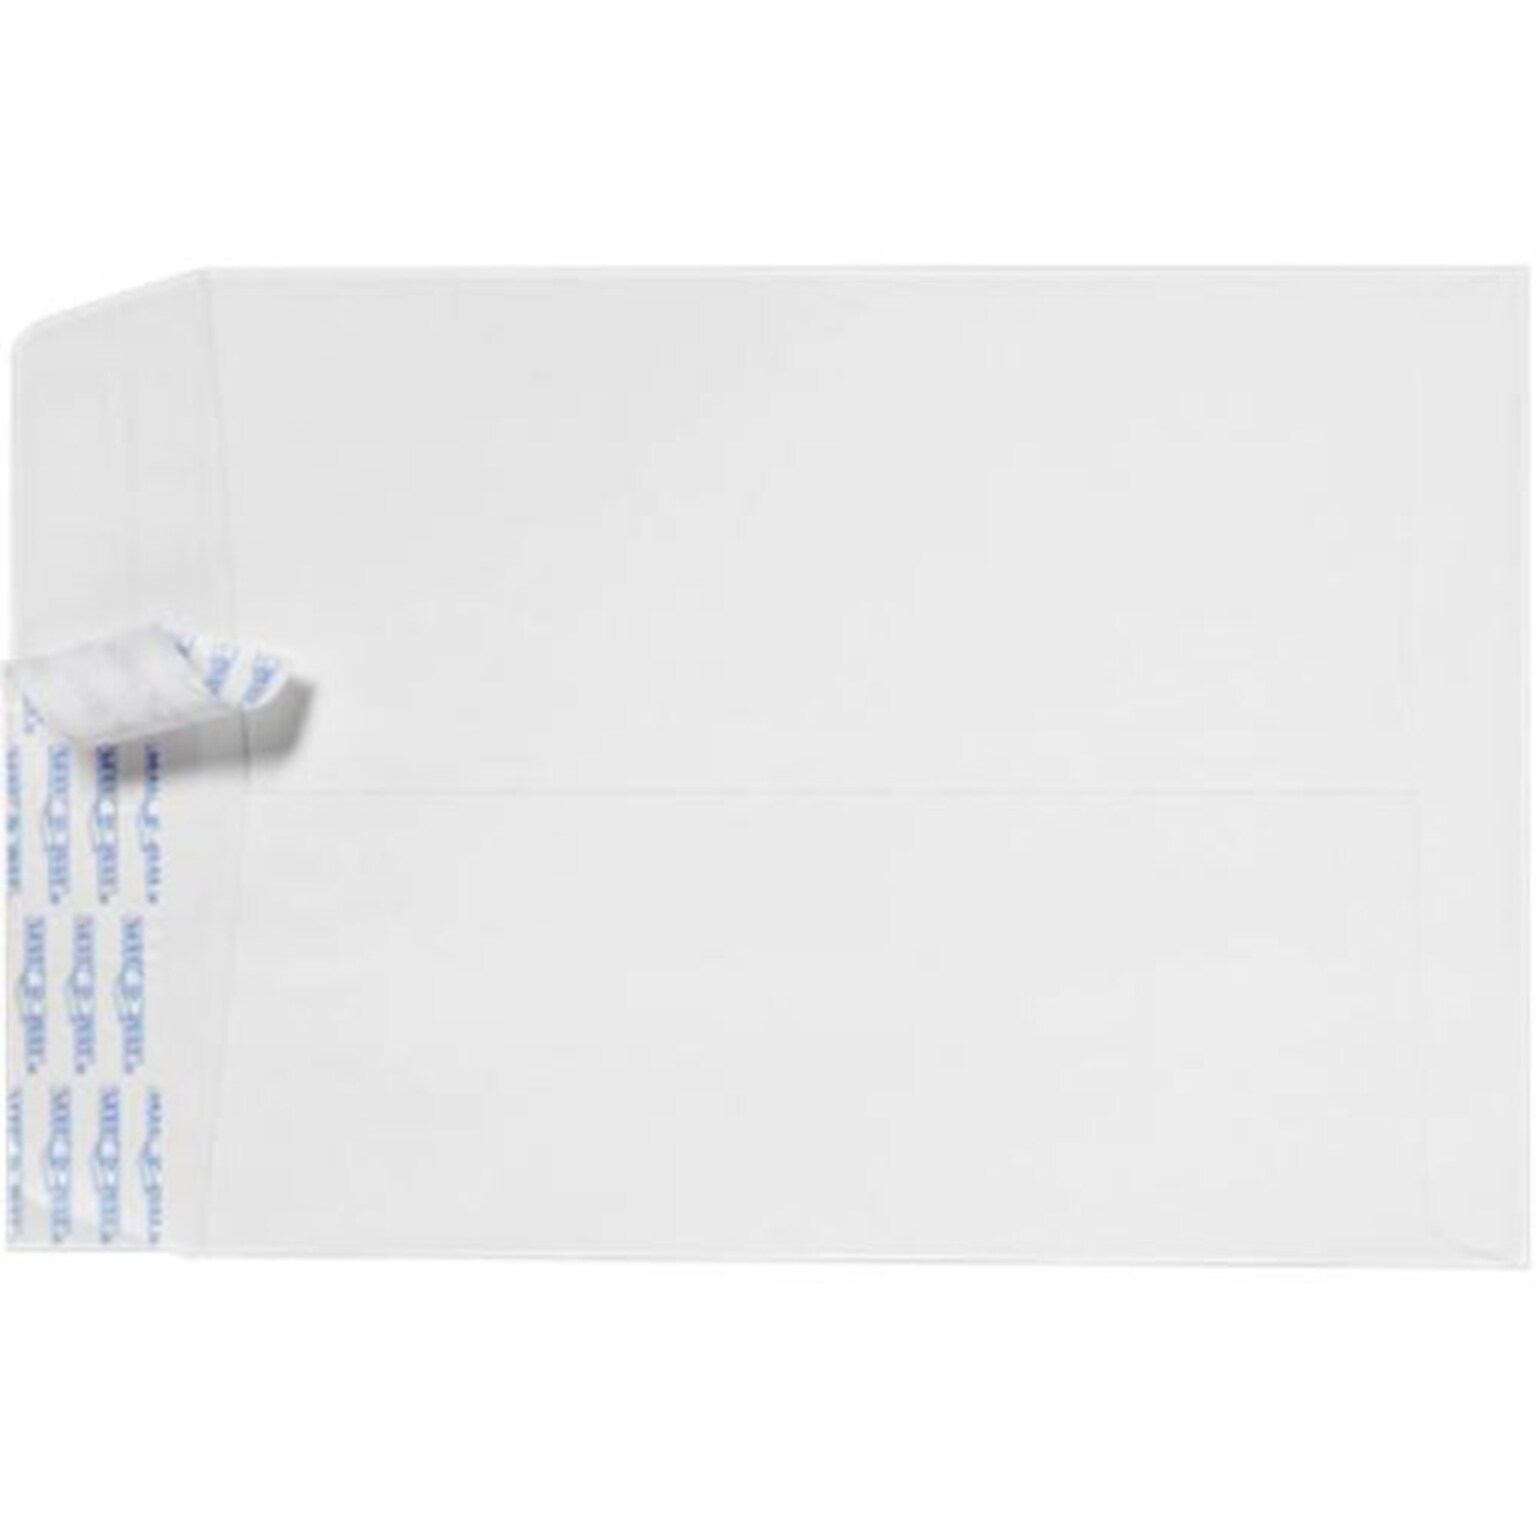 JAM Paper Self Seal Business Envelope, 10 x 13, White, 50 Pack (75423-50)